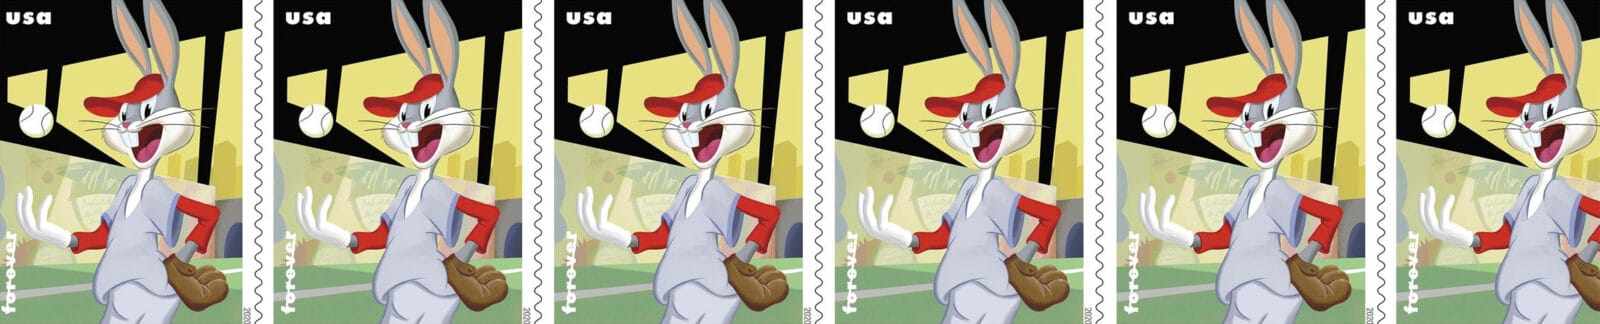 Baseball Bugs Bunny - USPS Postage Stamp header